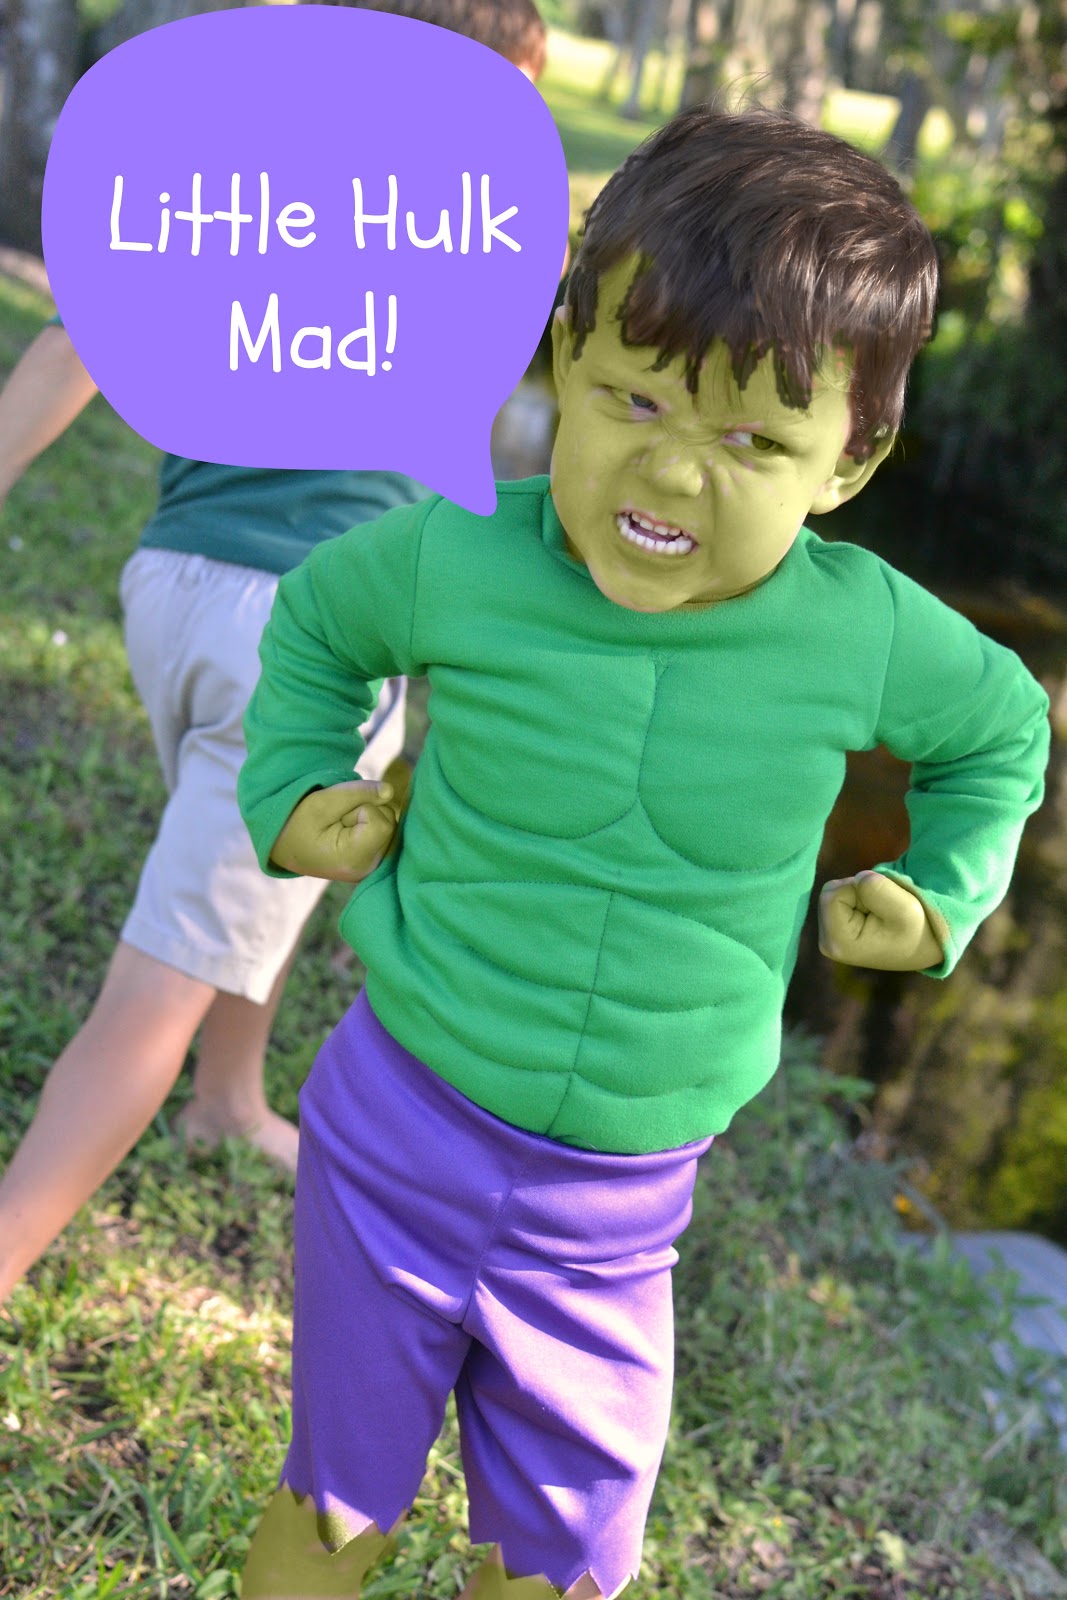 Baby Hulk Muscle Costume